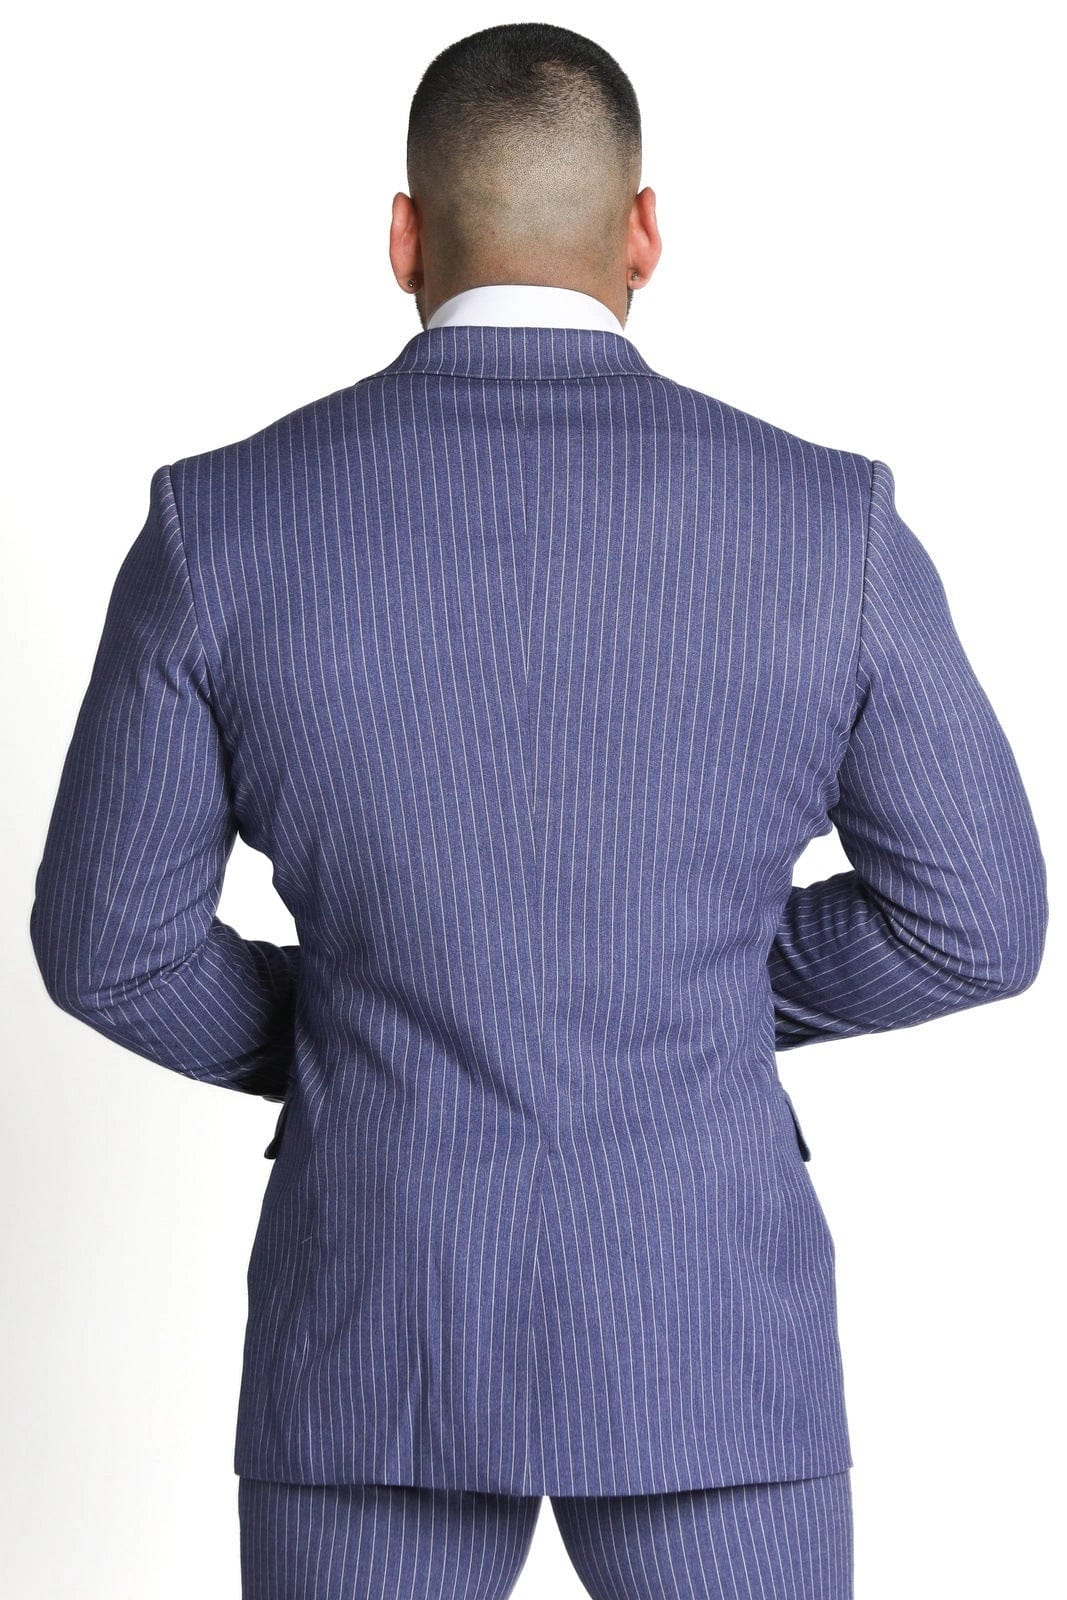 Mens Blue Pinstripe Suit - Gerardo Collection